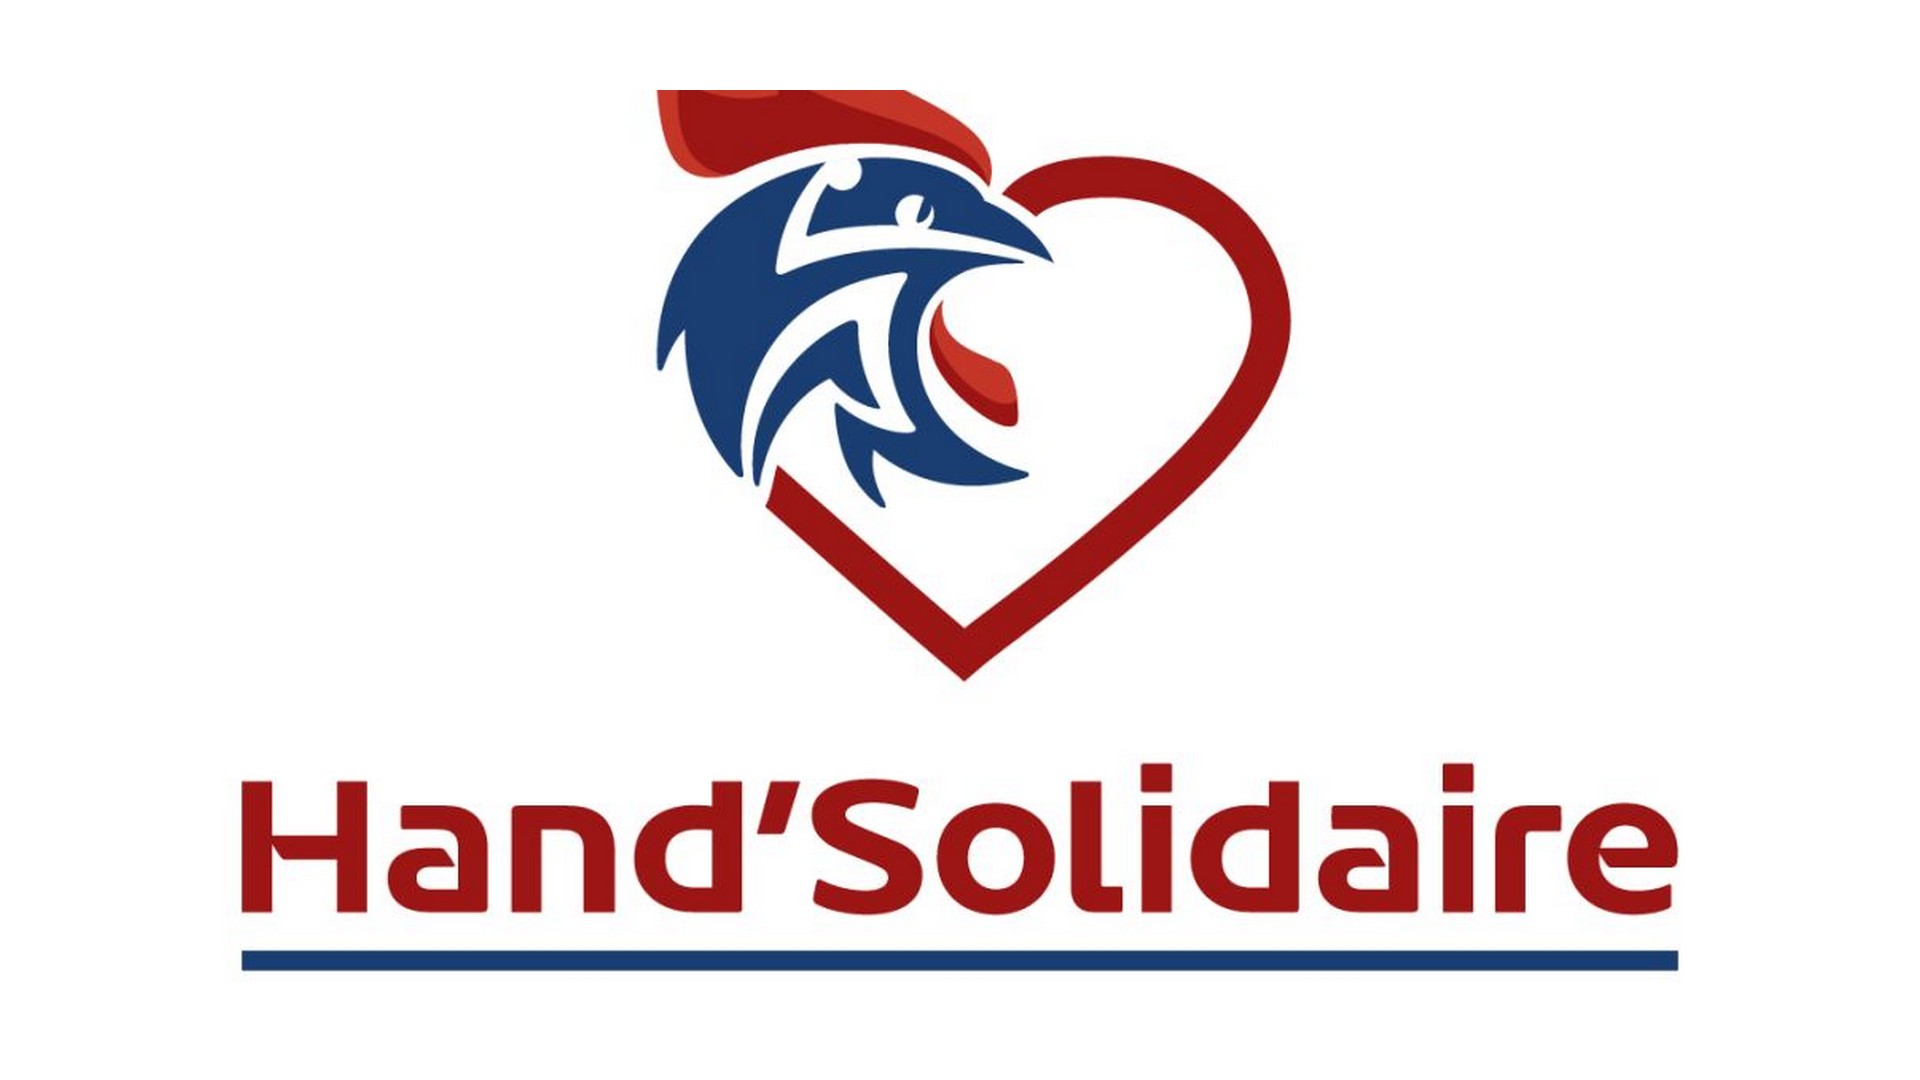 FF Handball x Hand Solidaire (logo) 2022